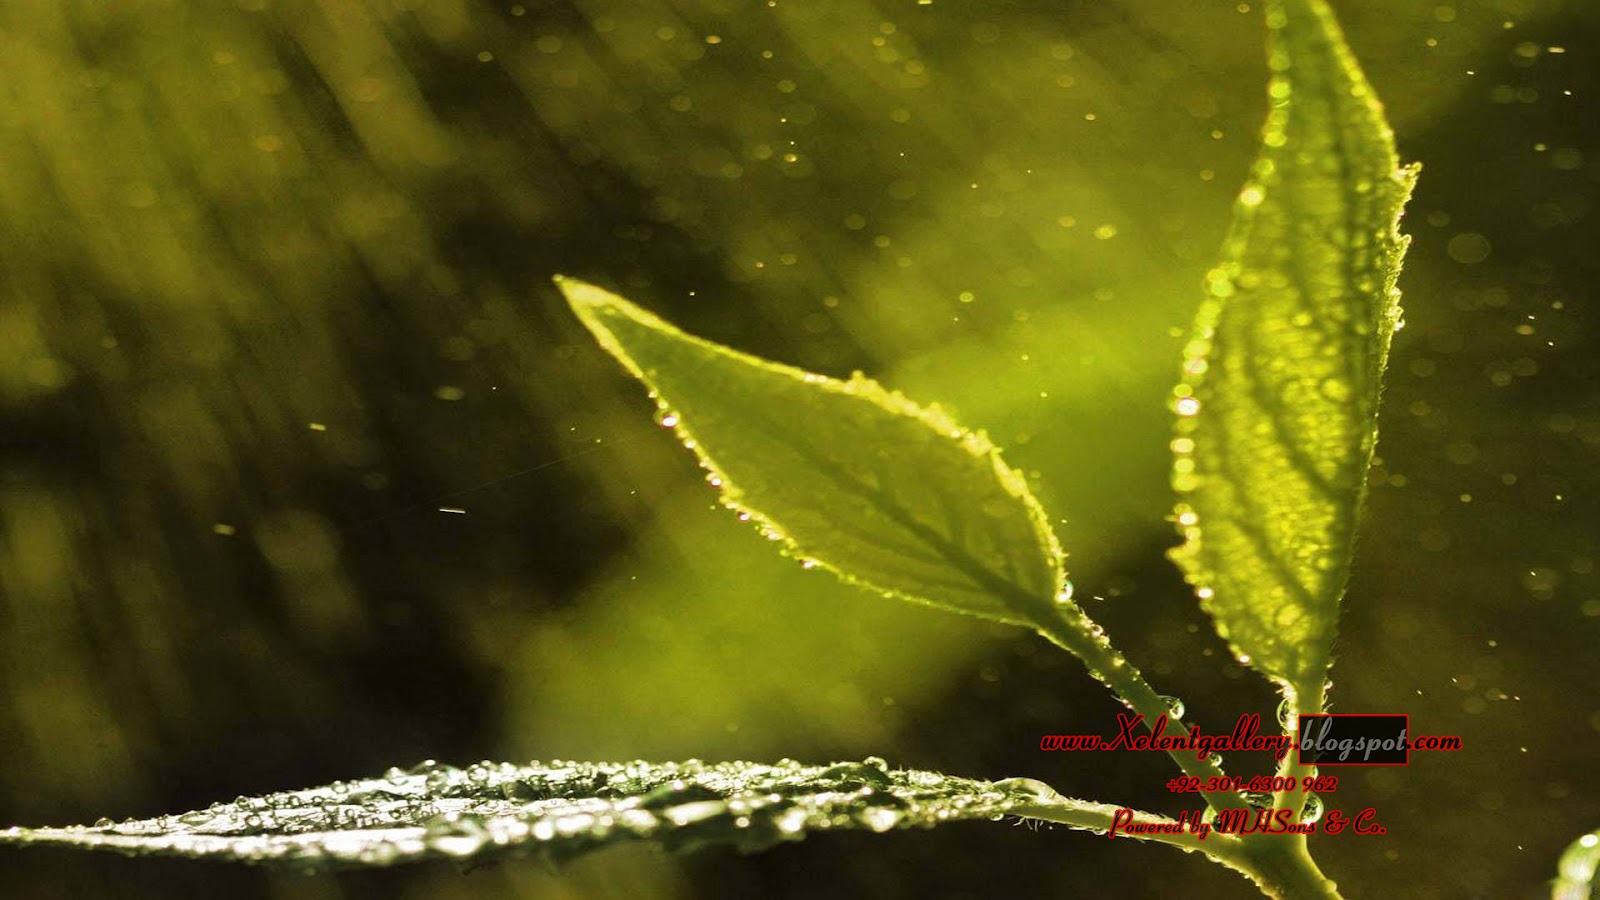 rainy season hd wallpaper,water,nature,green,leaf,macro photography